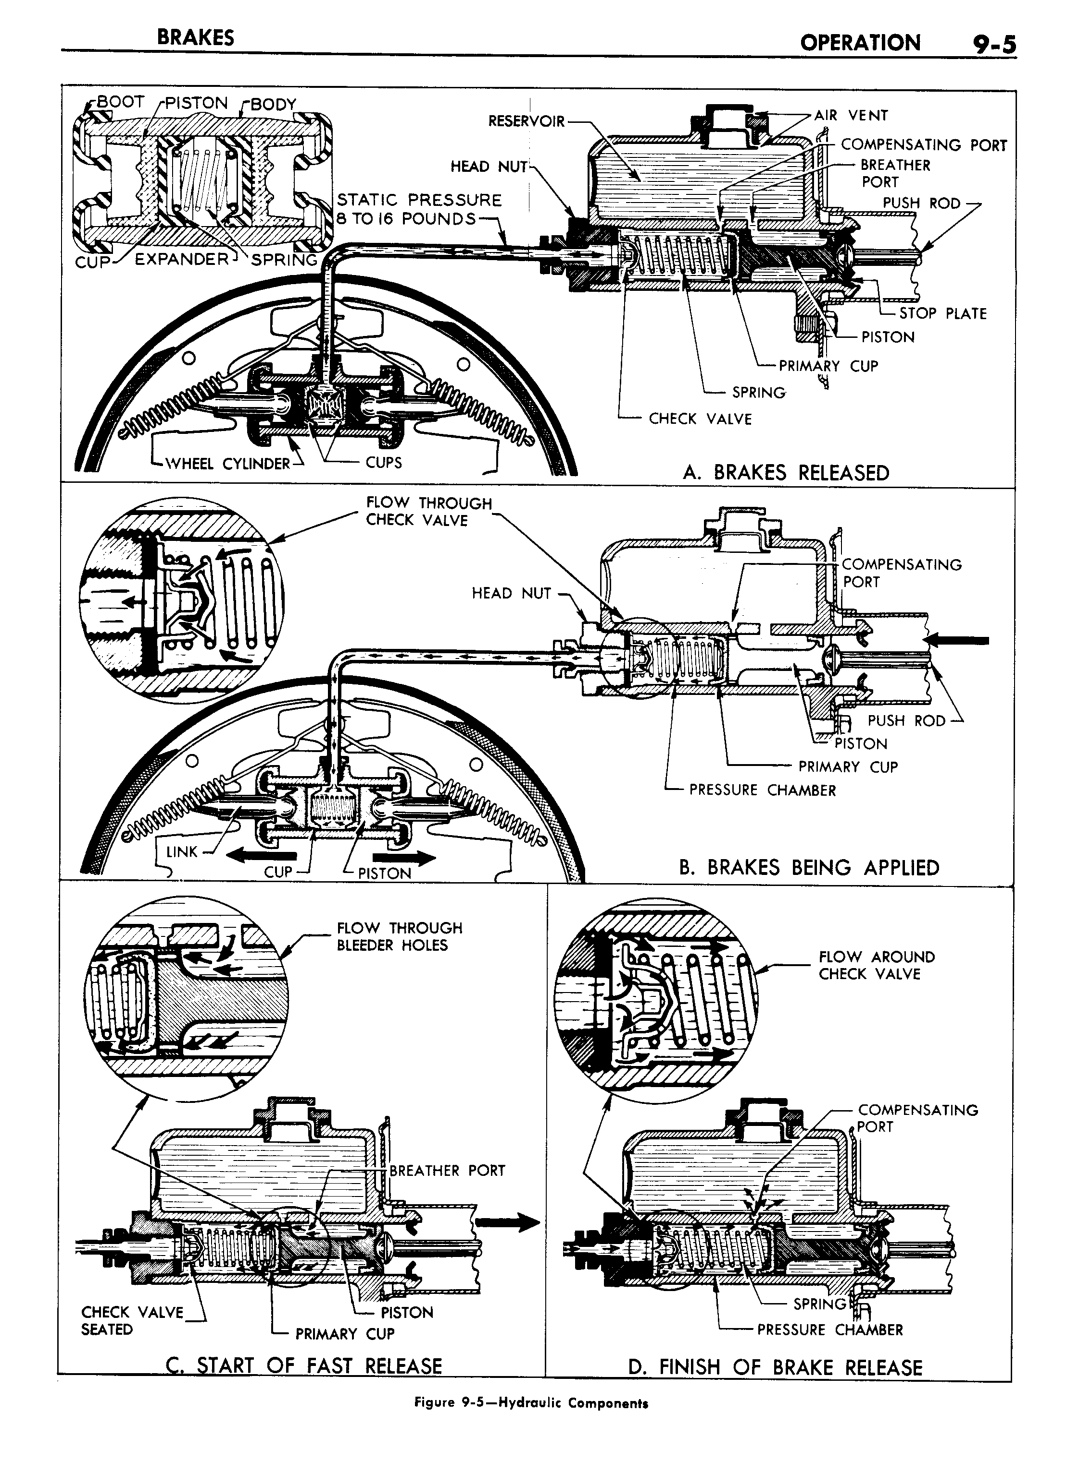 n_10 1957 Buick Shop Manual - Brakes-005-005.jpg